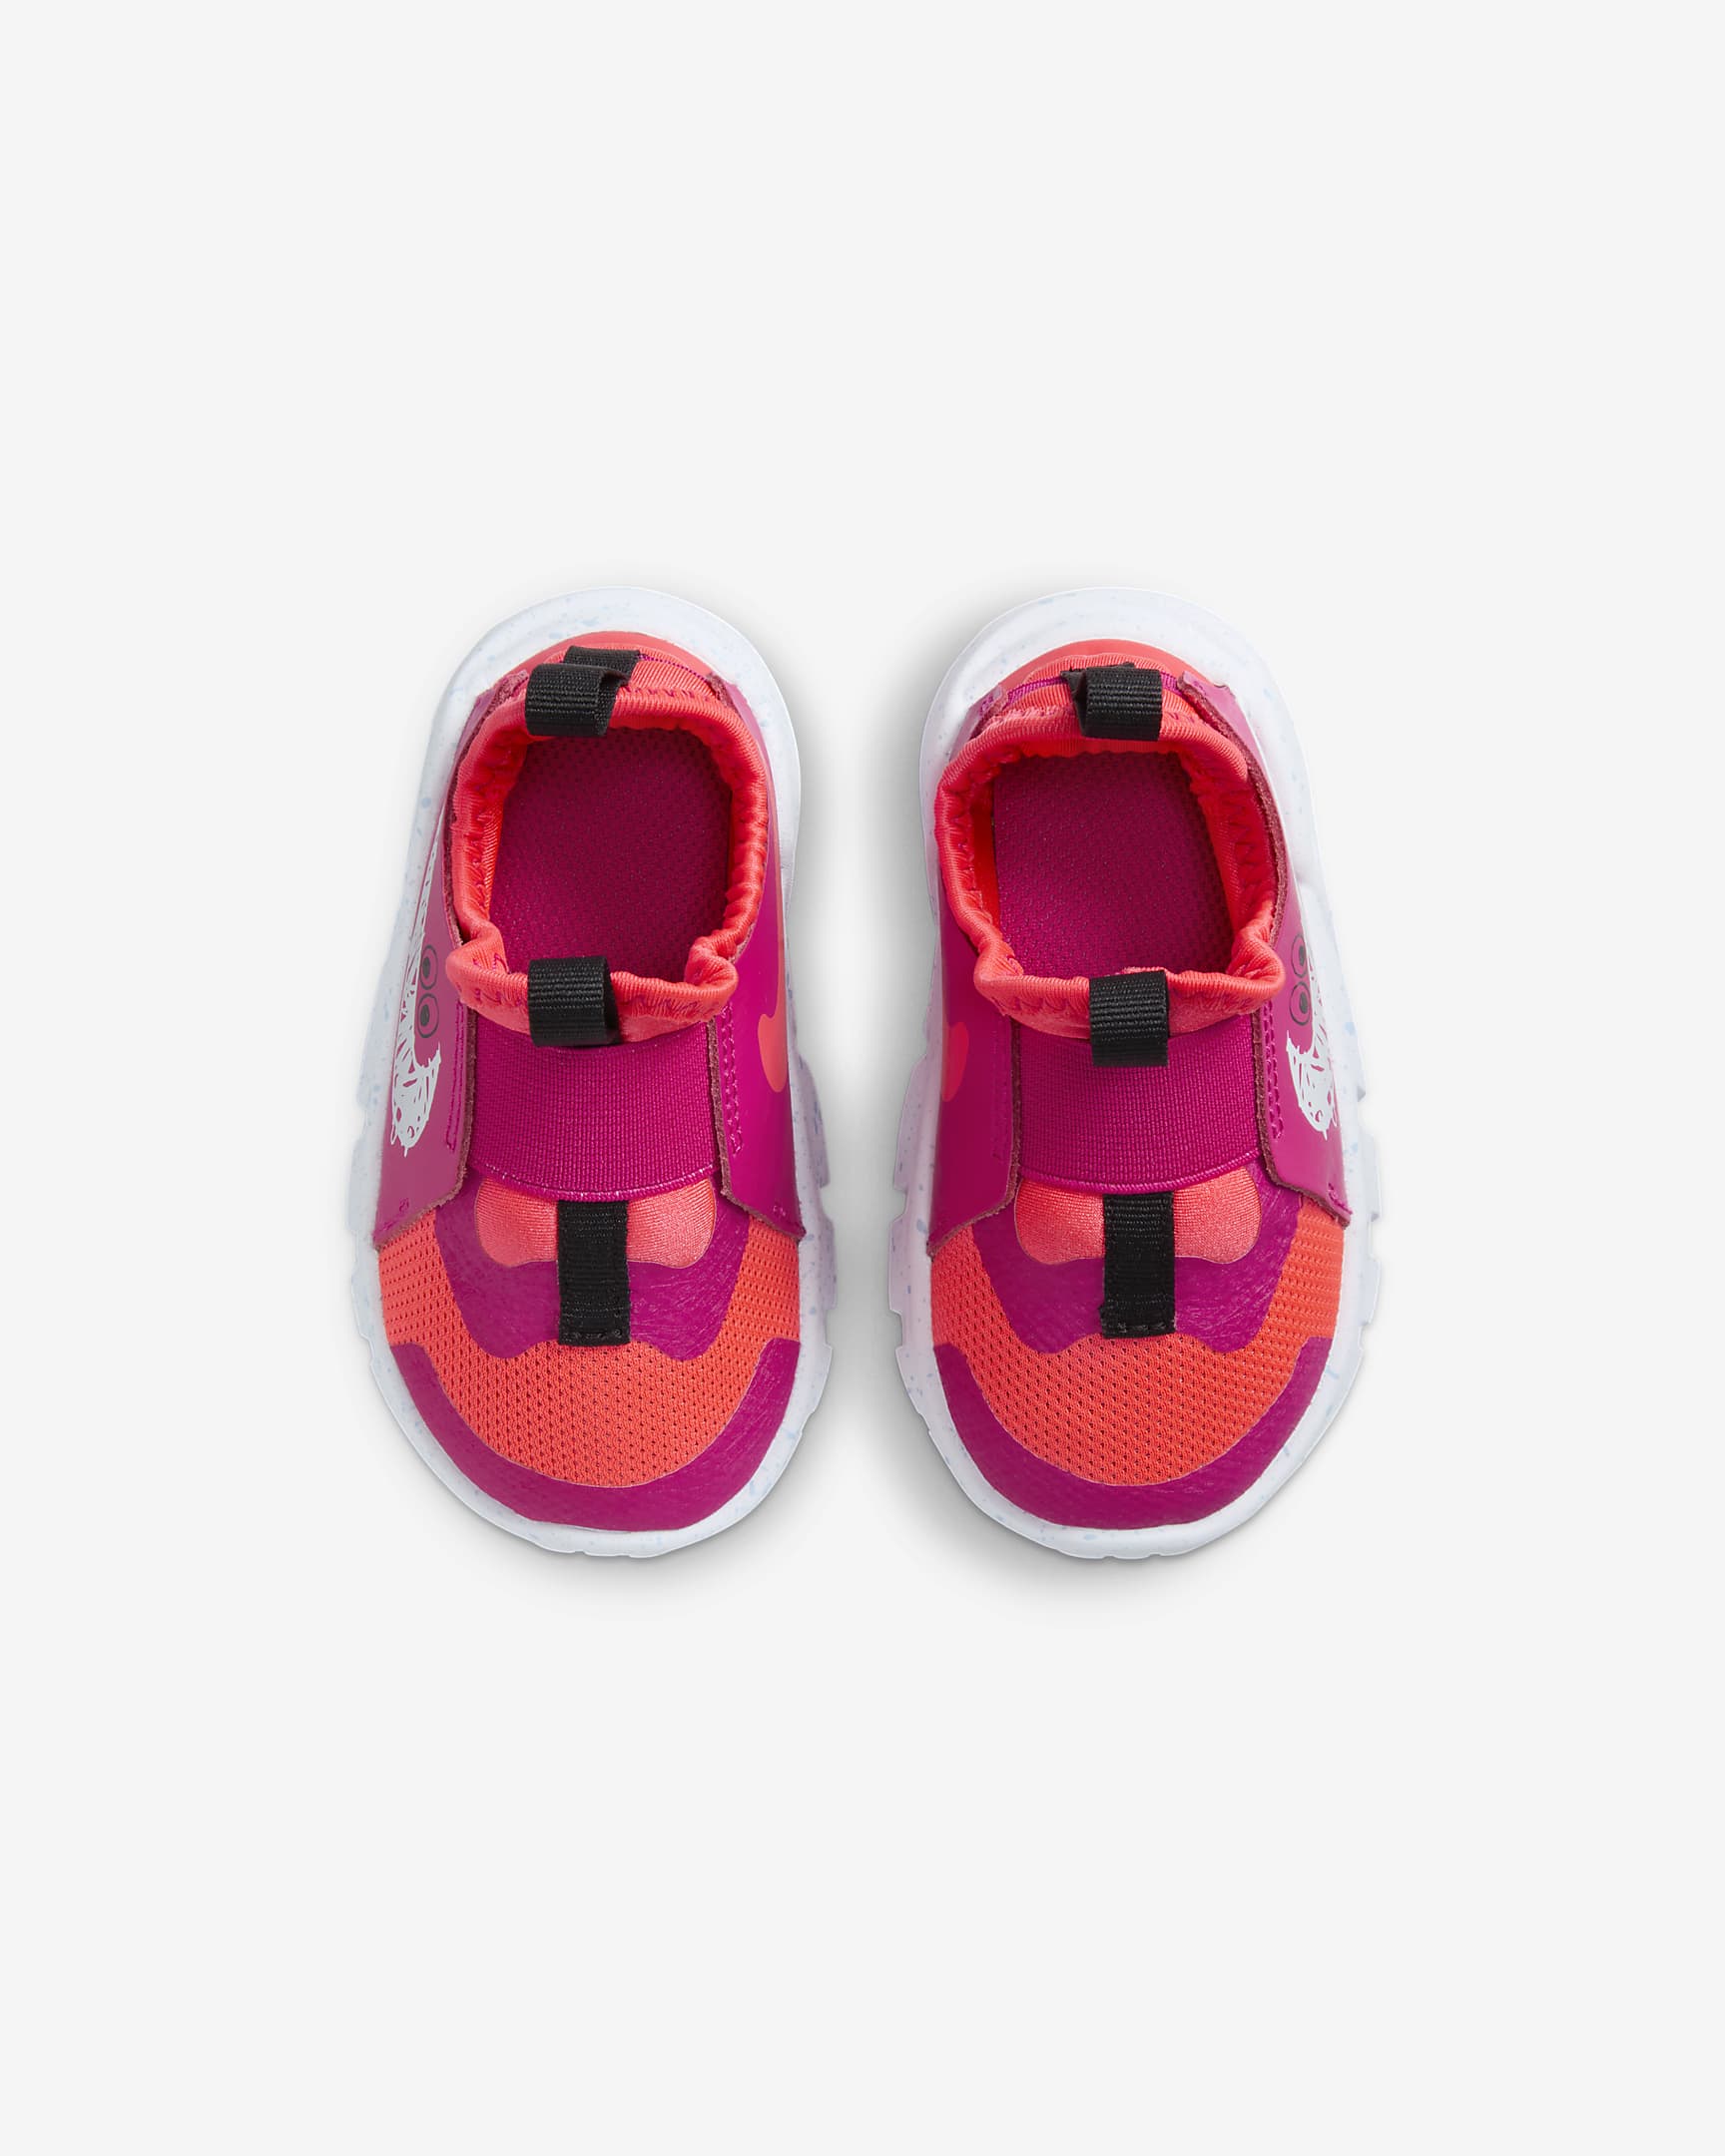 Nike Flex Runner 2 Baby/Toddler Shoes. Nike FI